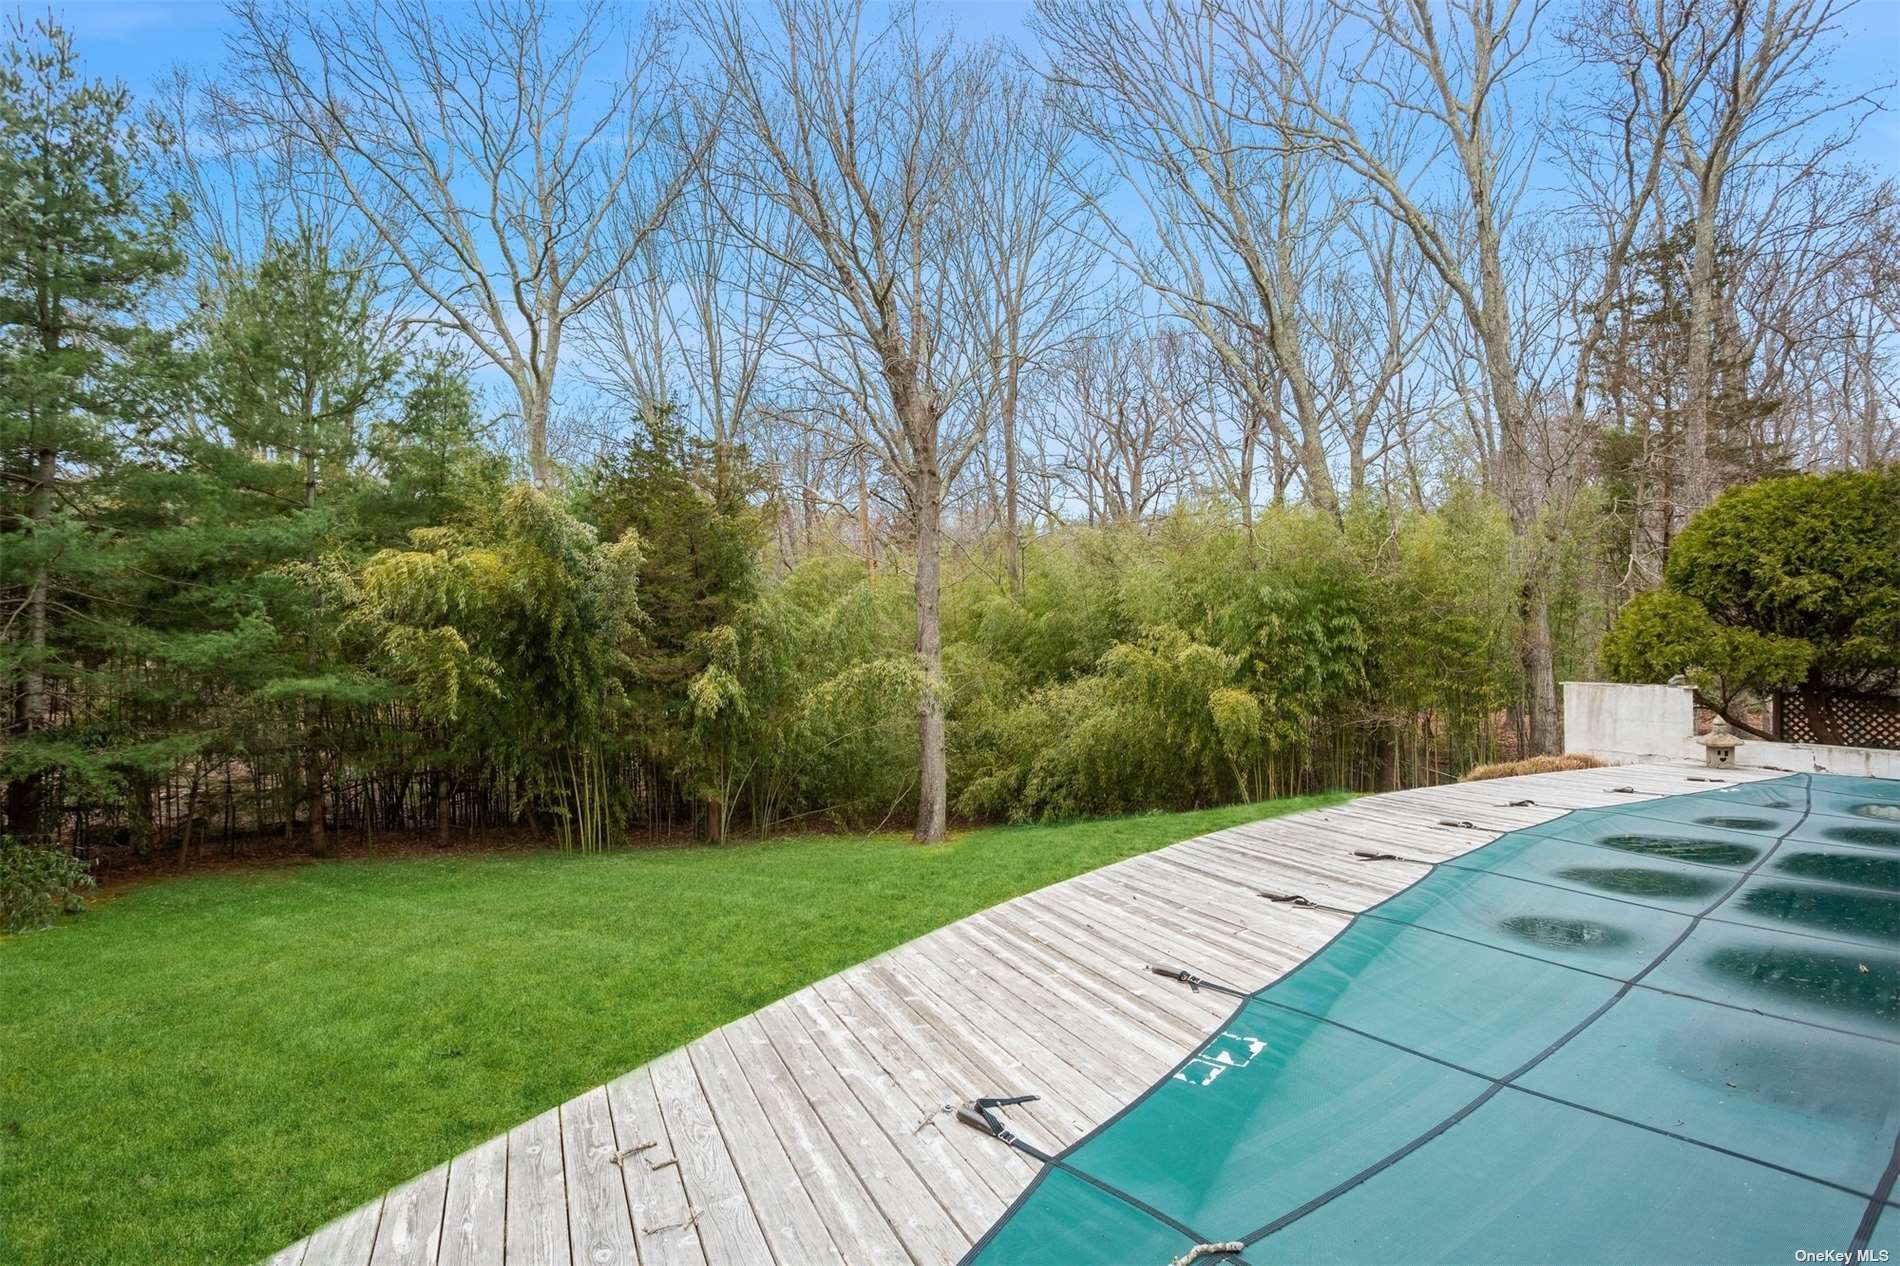 Rental Property at 27 Deerwood Path, Southampton, Hamptons, NY - Bedrooms: 4 
Bathrooms: 3  - $40,000 MO.